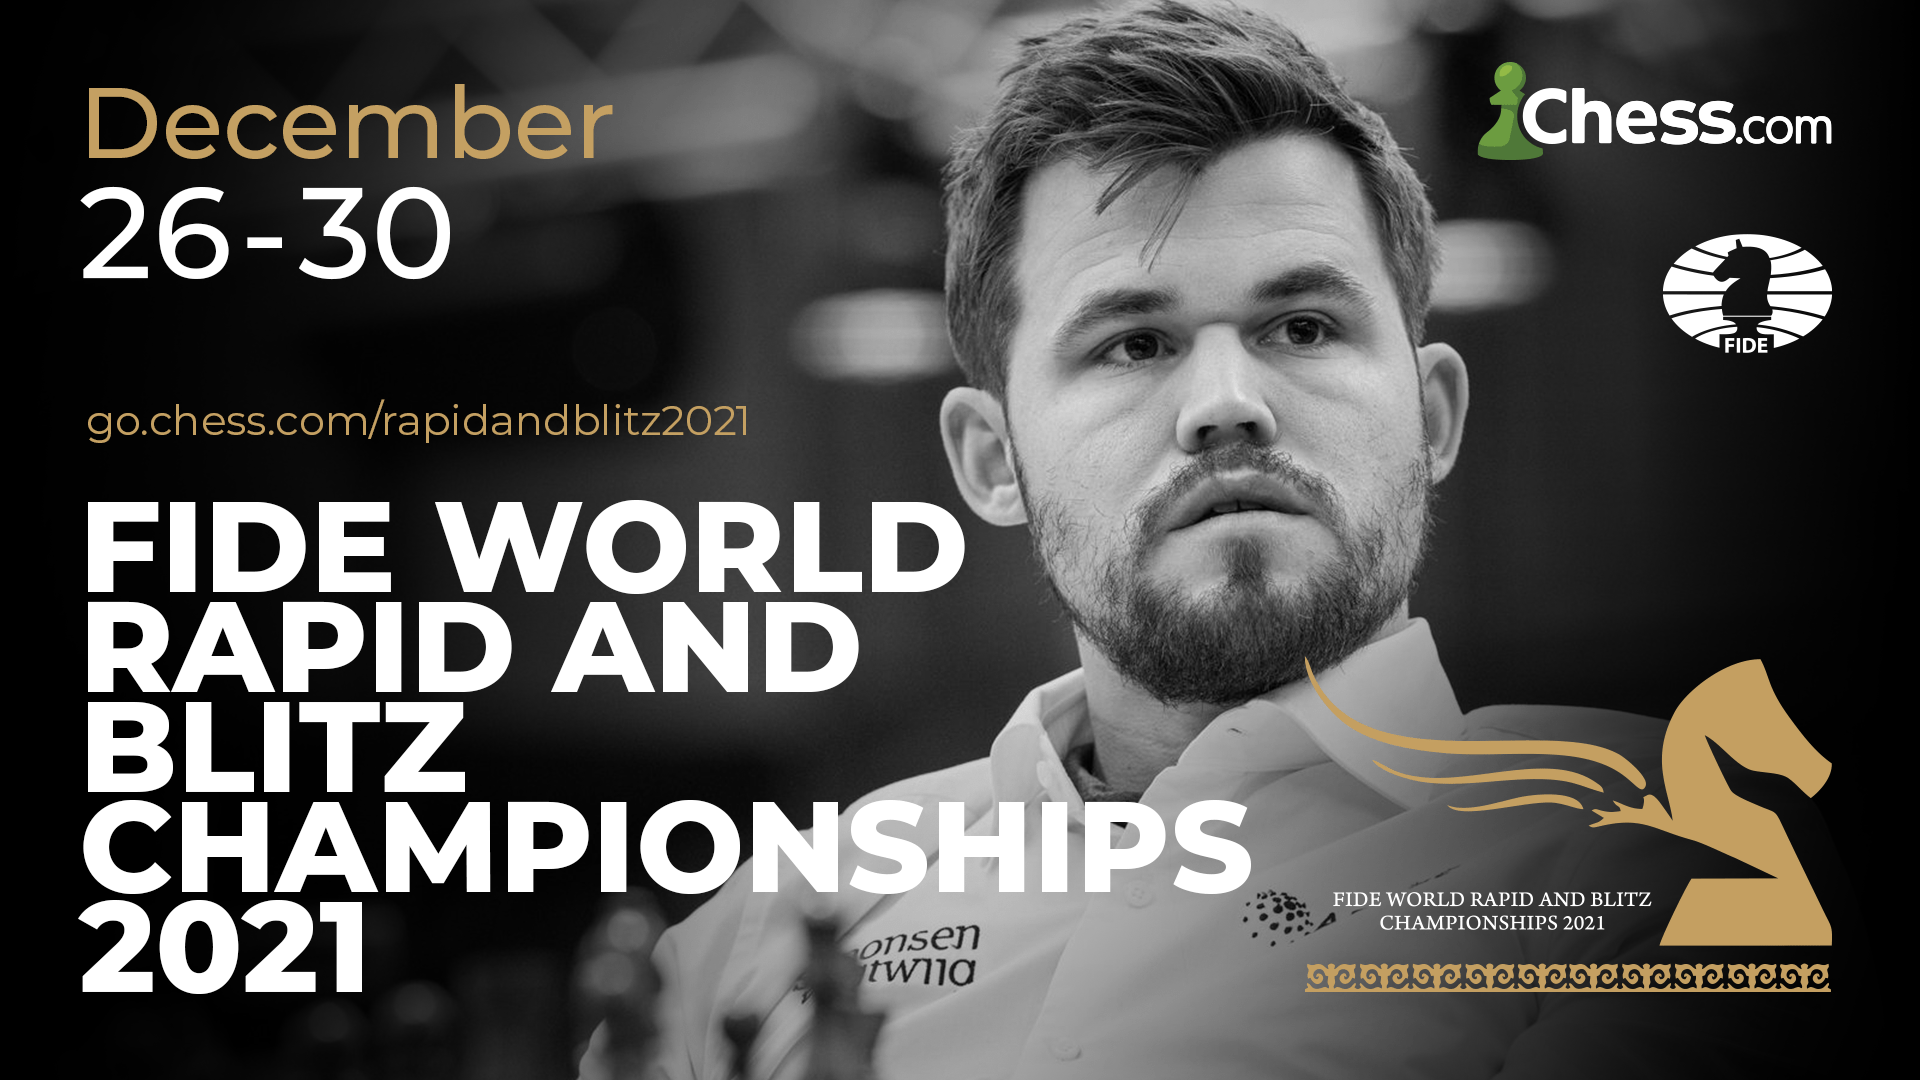 2021 FIDE World Rapid and Blitz Championship